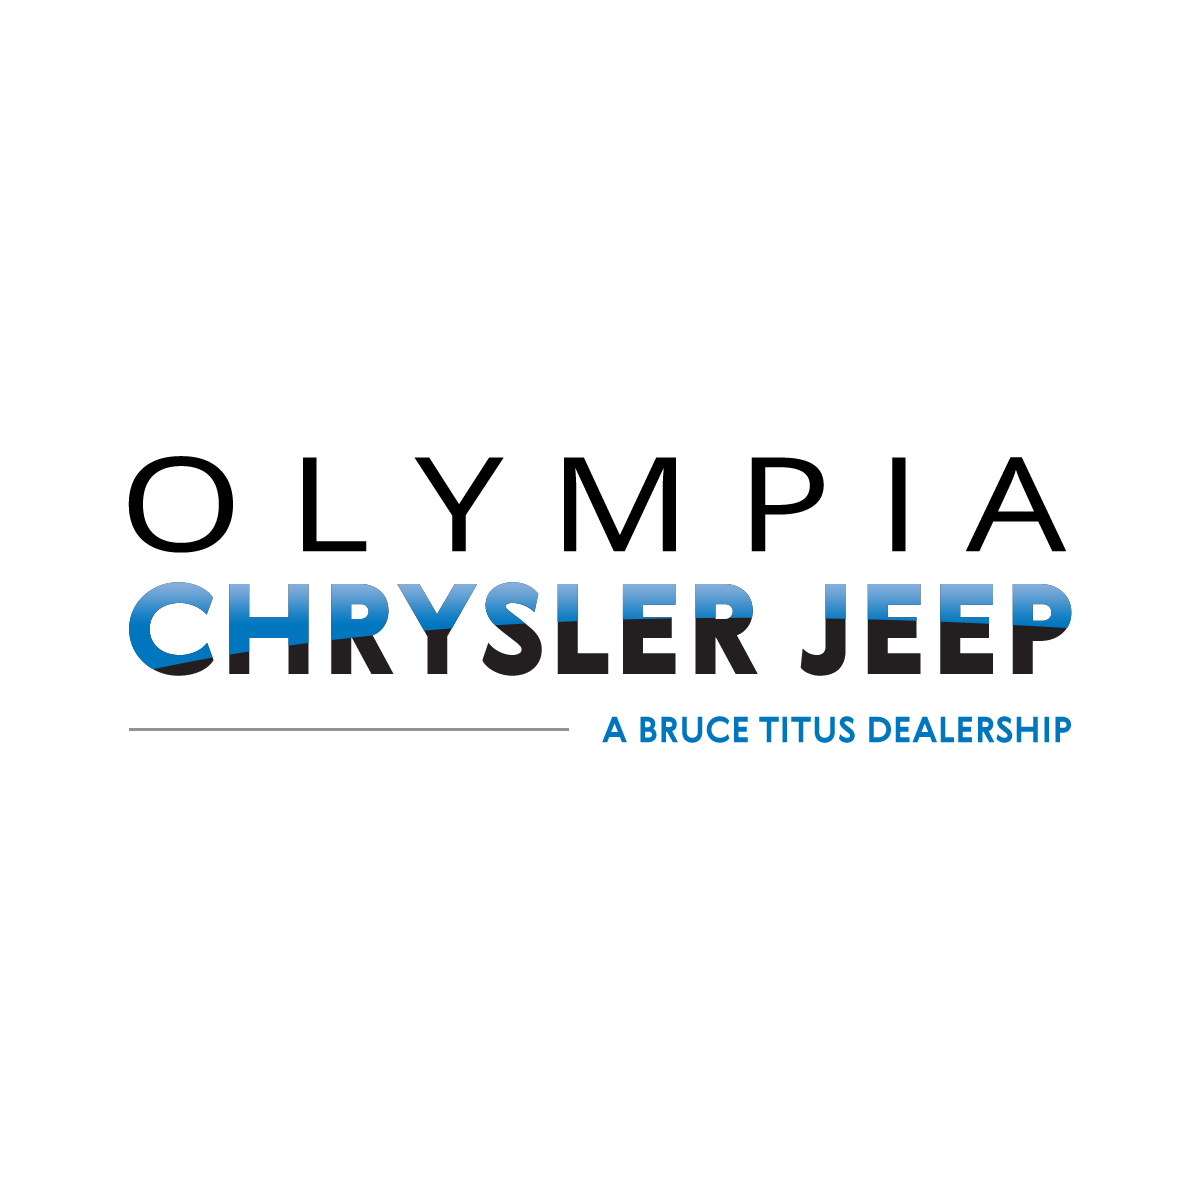 Olympia Chrysler Jeep - Olympia, WA 98502 - (360)754-5500 | ShowMeLocal.com